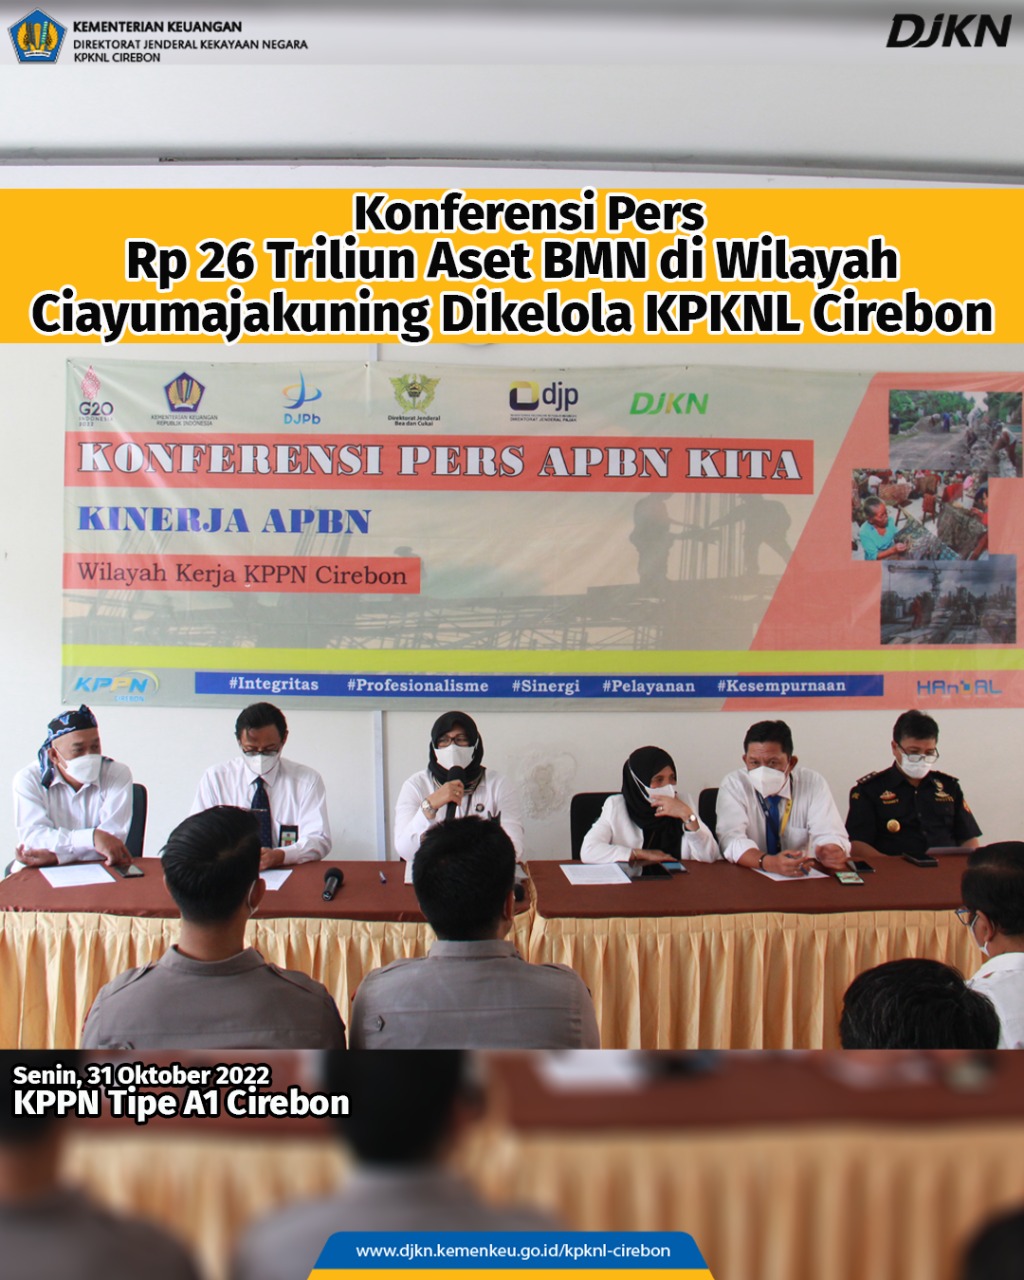 Rp 26 Triliun Aset BMN di Wilayah Ciayumajakuning Dikelola KPKNL Cirebon